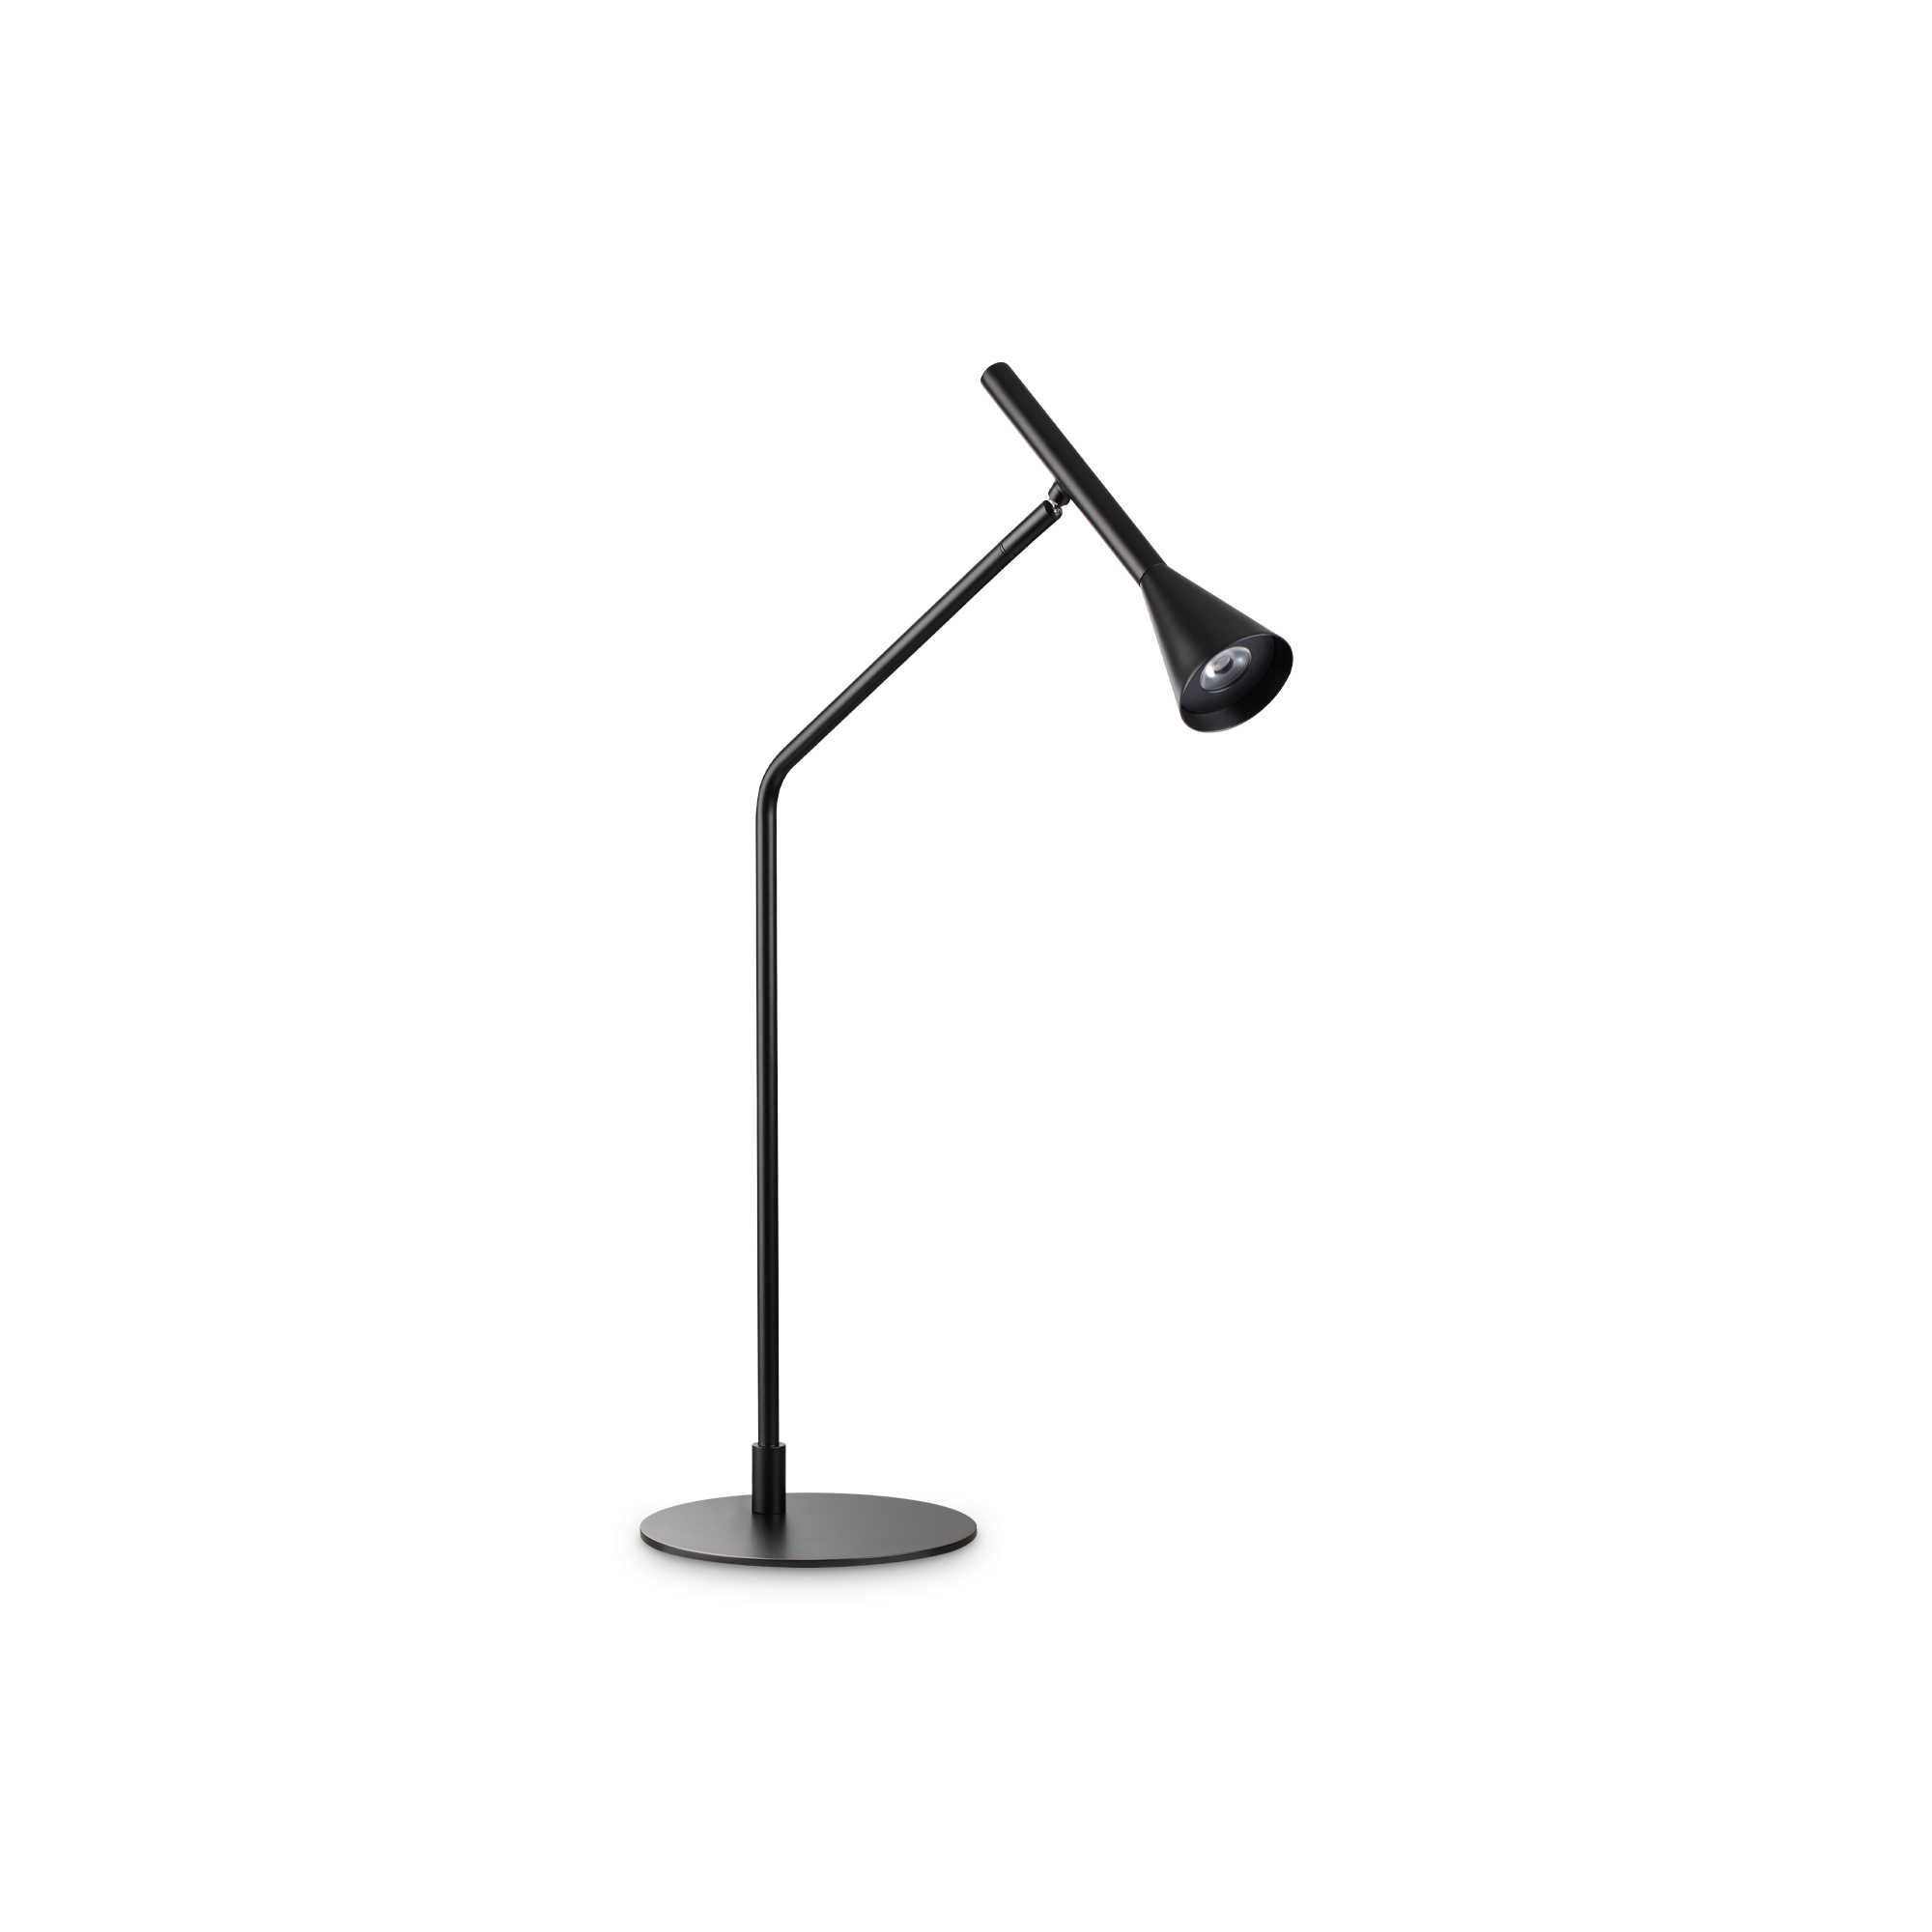 AD hotelska oprema Stolna lampa Diesis tl- Crne boje slika proizvoda